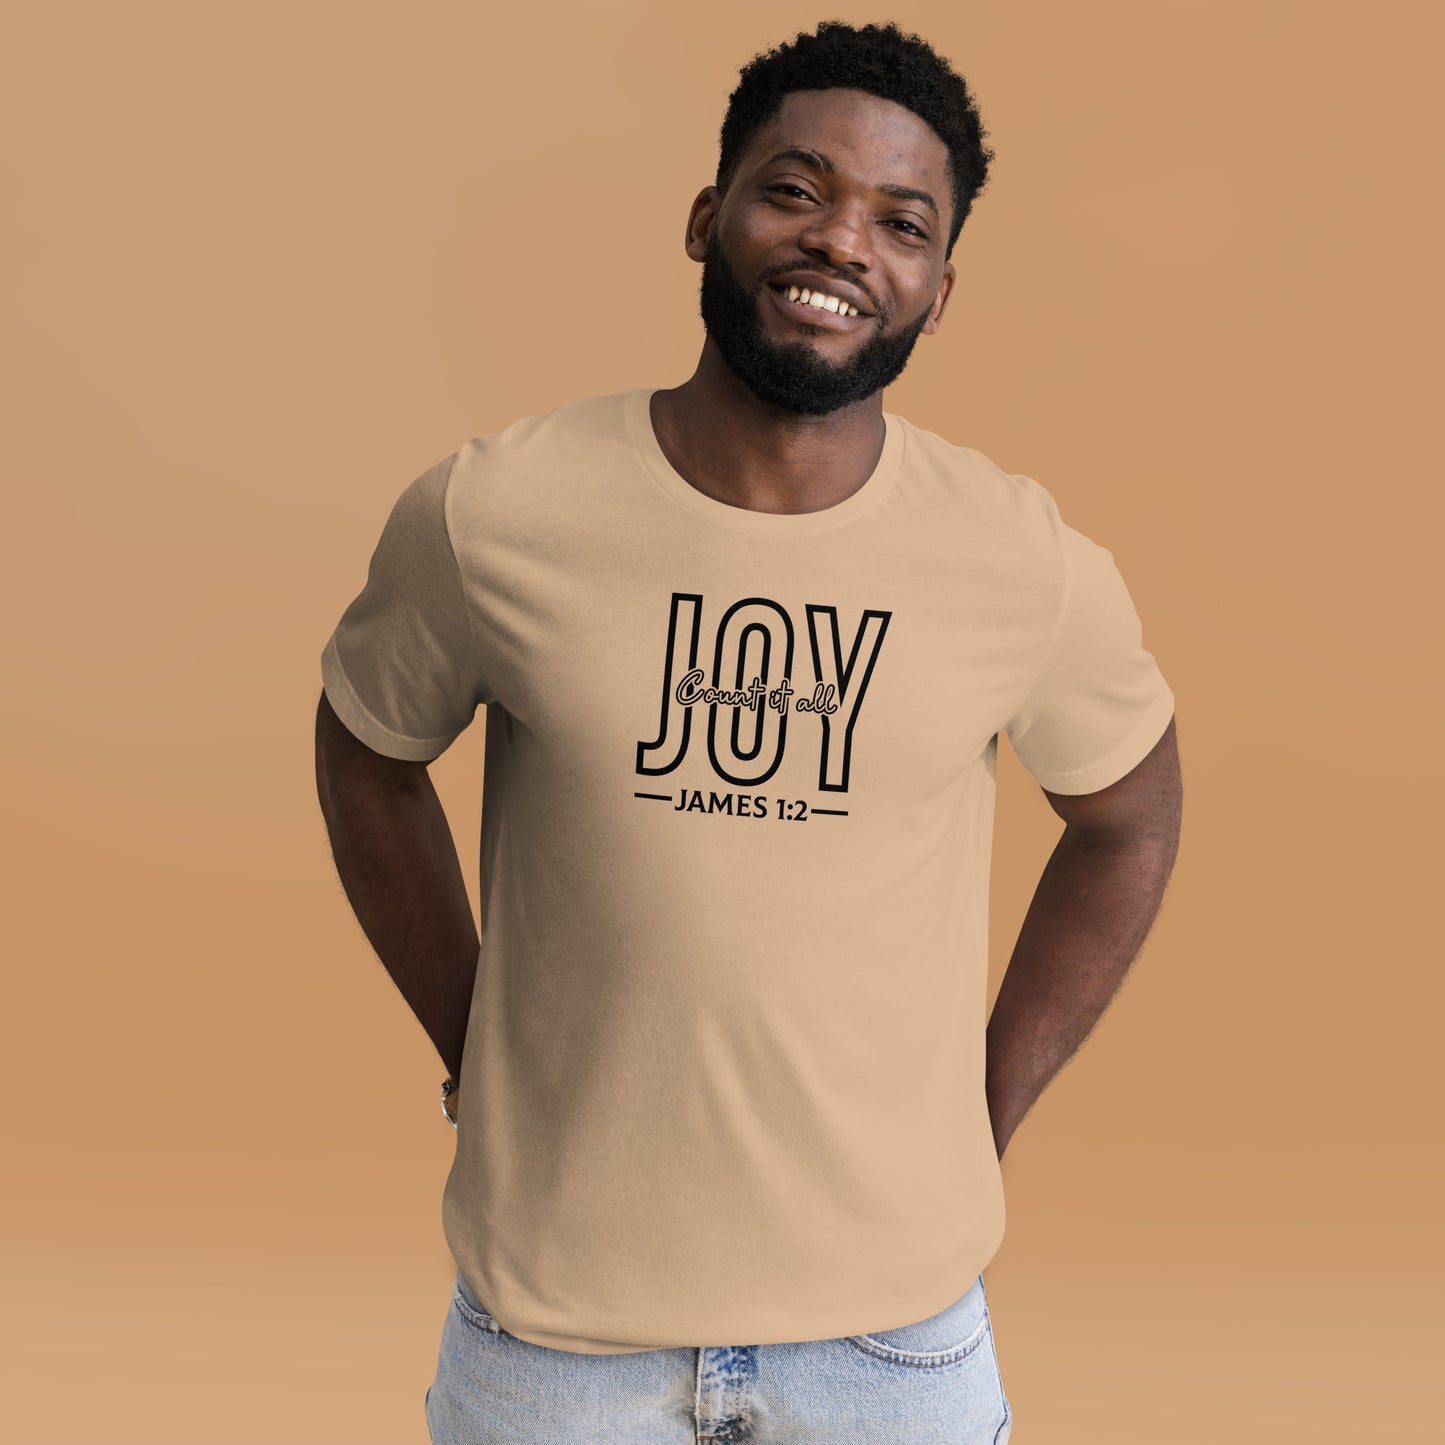 Count it all joy  t-shirt